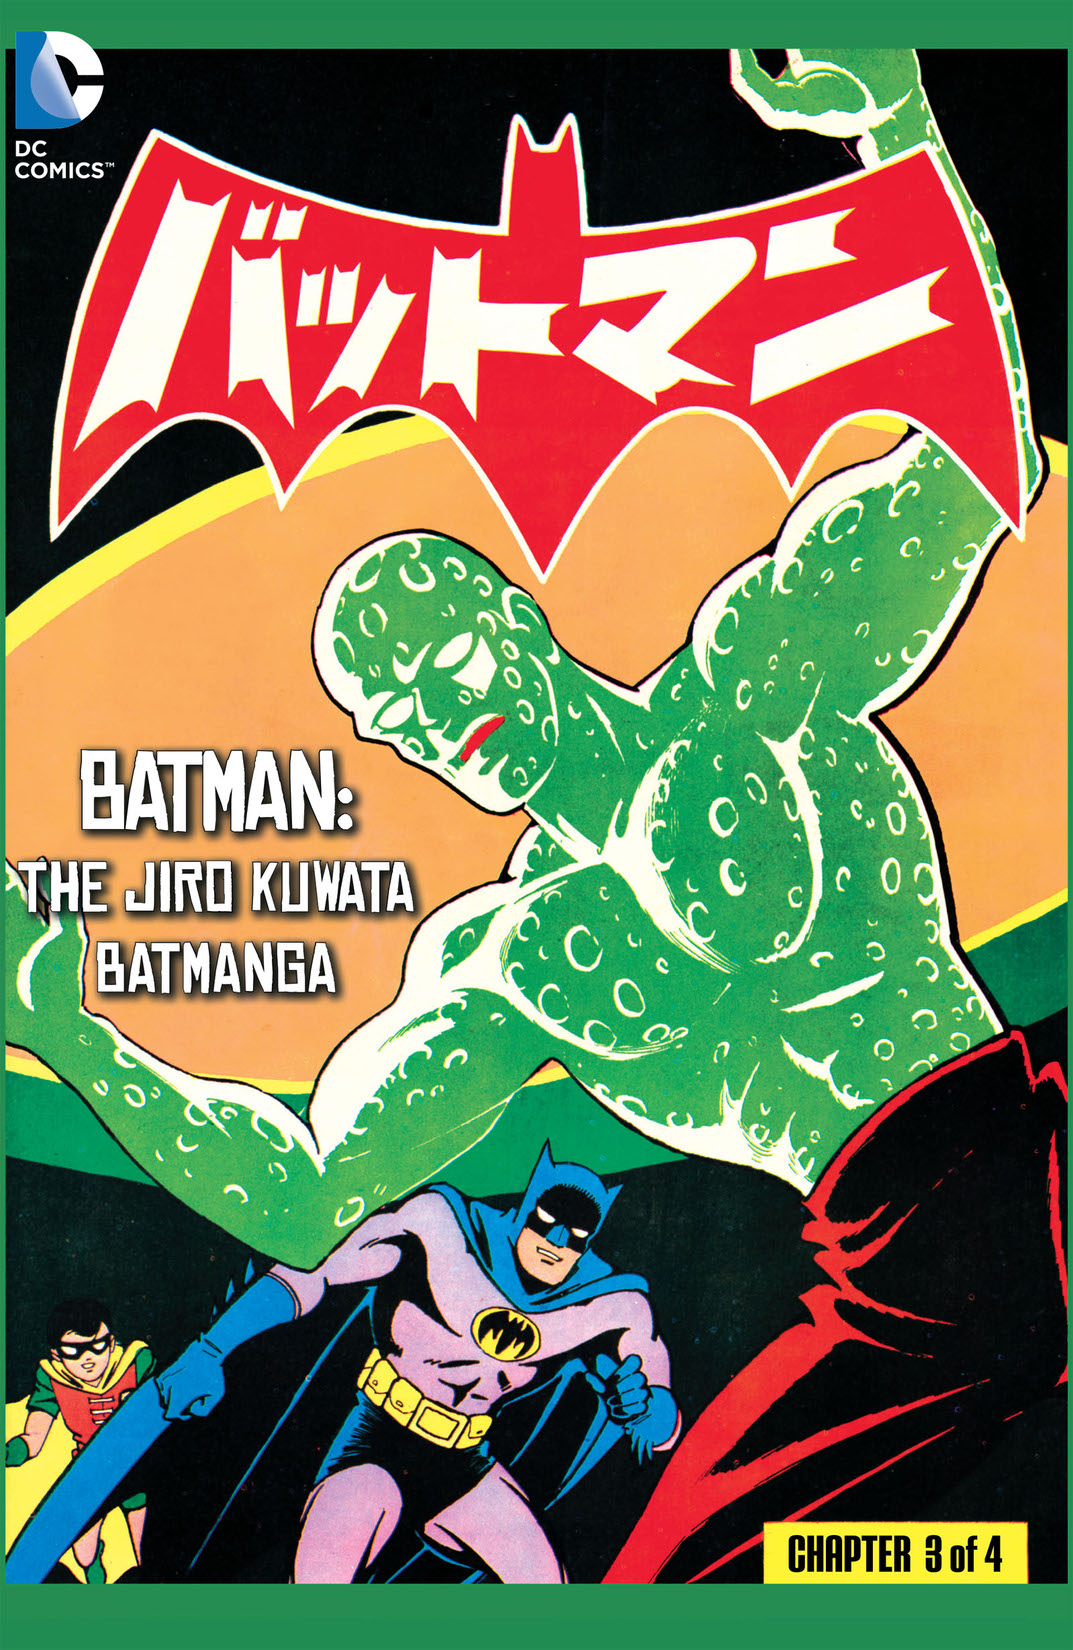 Batman: The Jiro Kuwata Batmanga #33 preview images